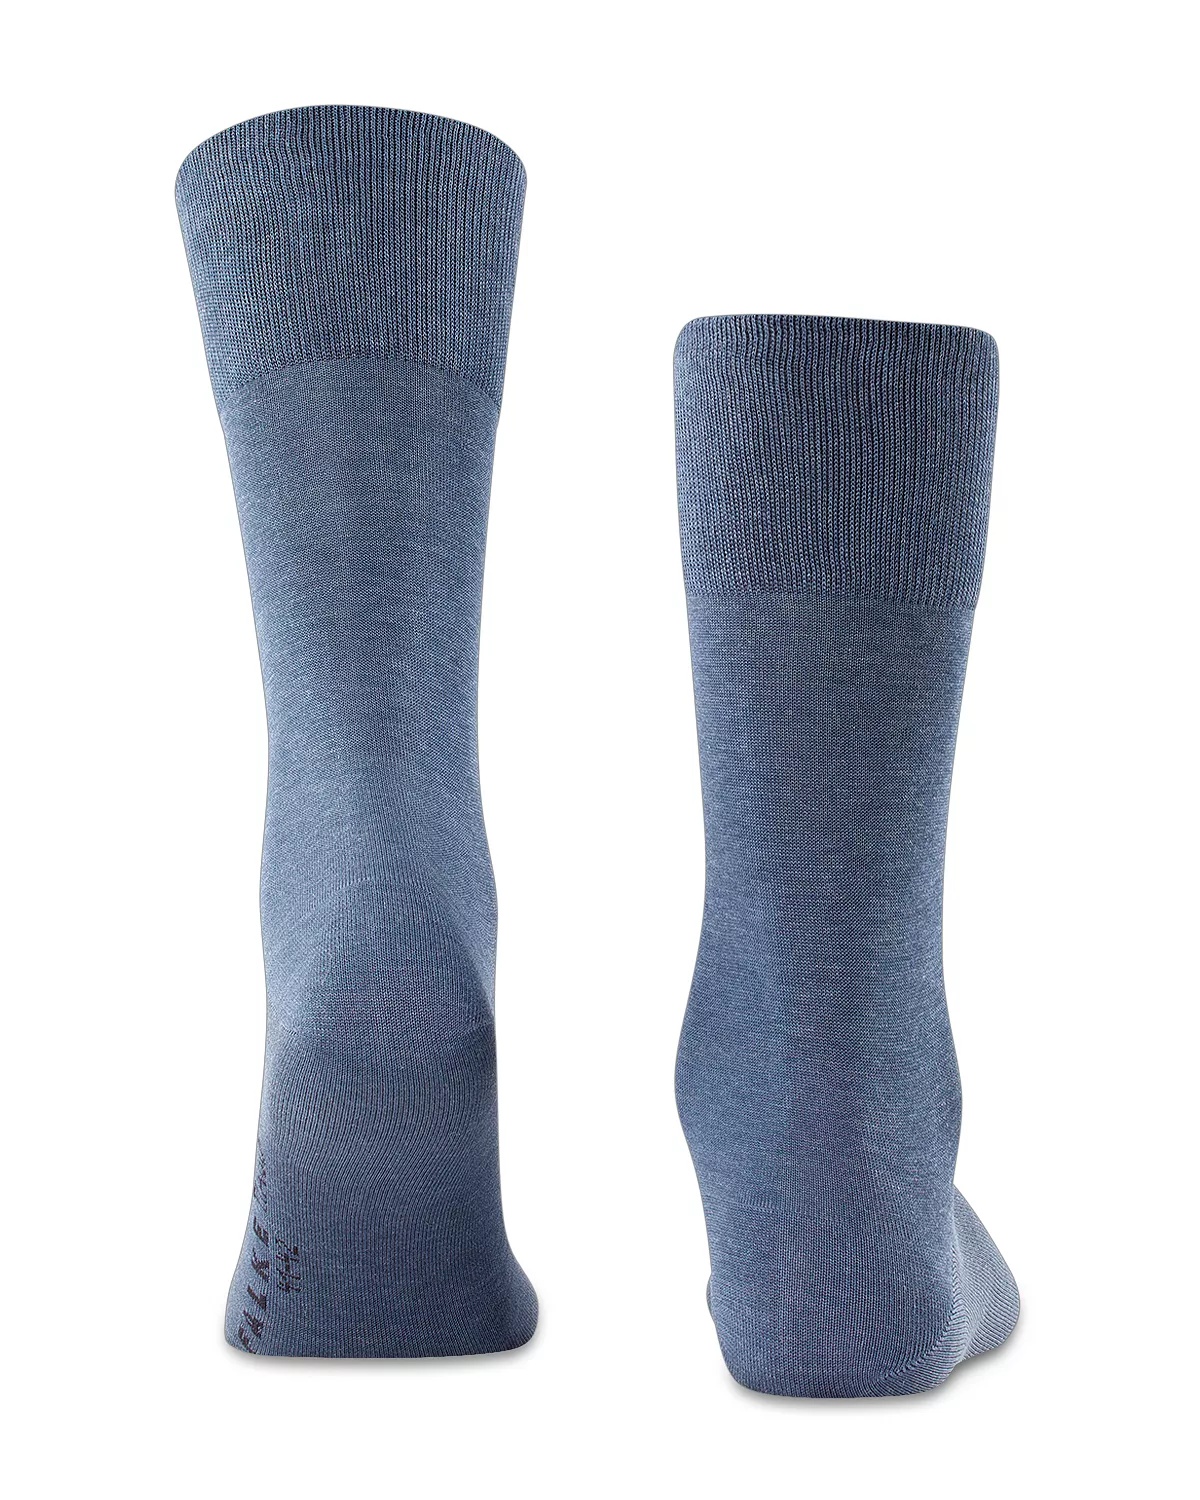 Tiago Cotton Blend Socks - 3